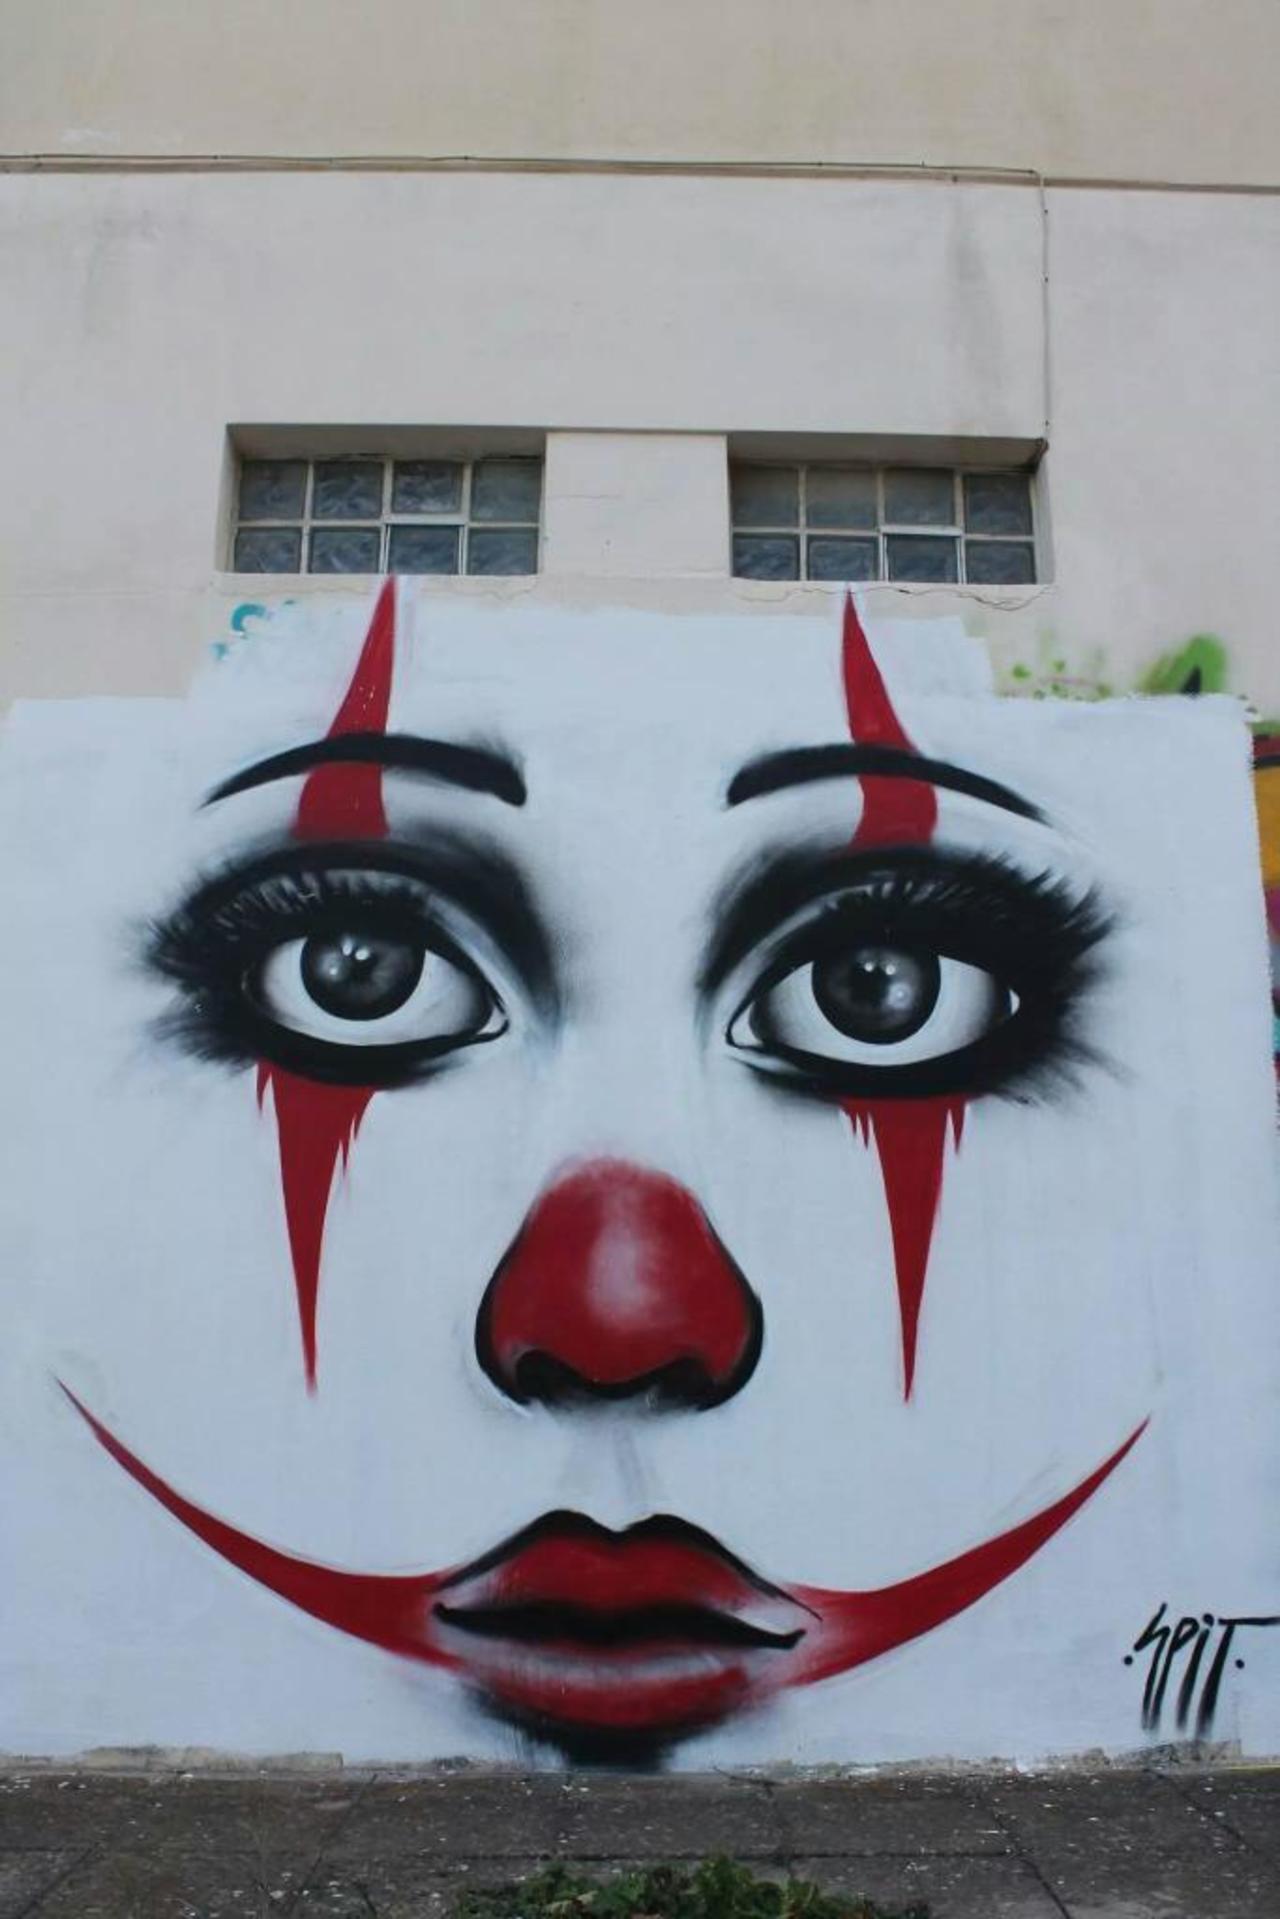 By Spit #mural #spraypaint #streetart #stencil #graffiti #urbanart #art http://t.co/cuGYk1gLoh